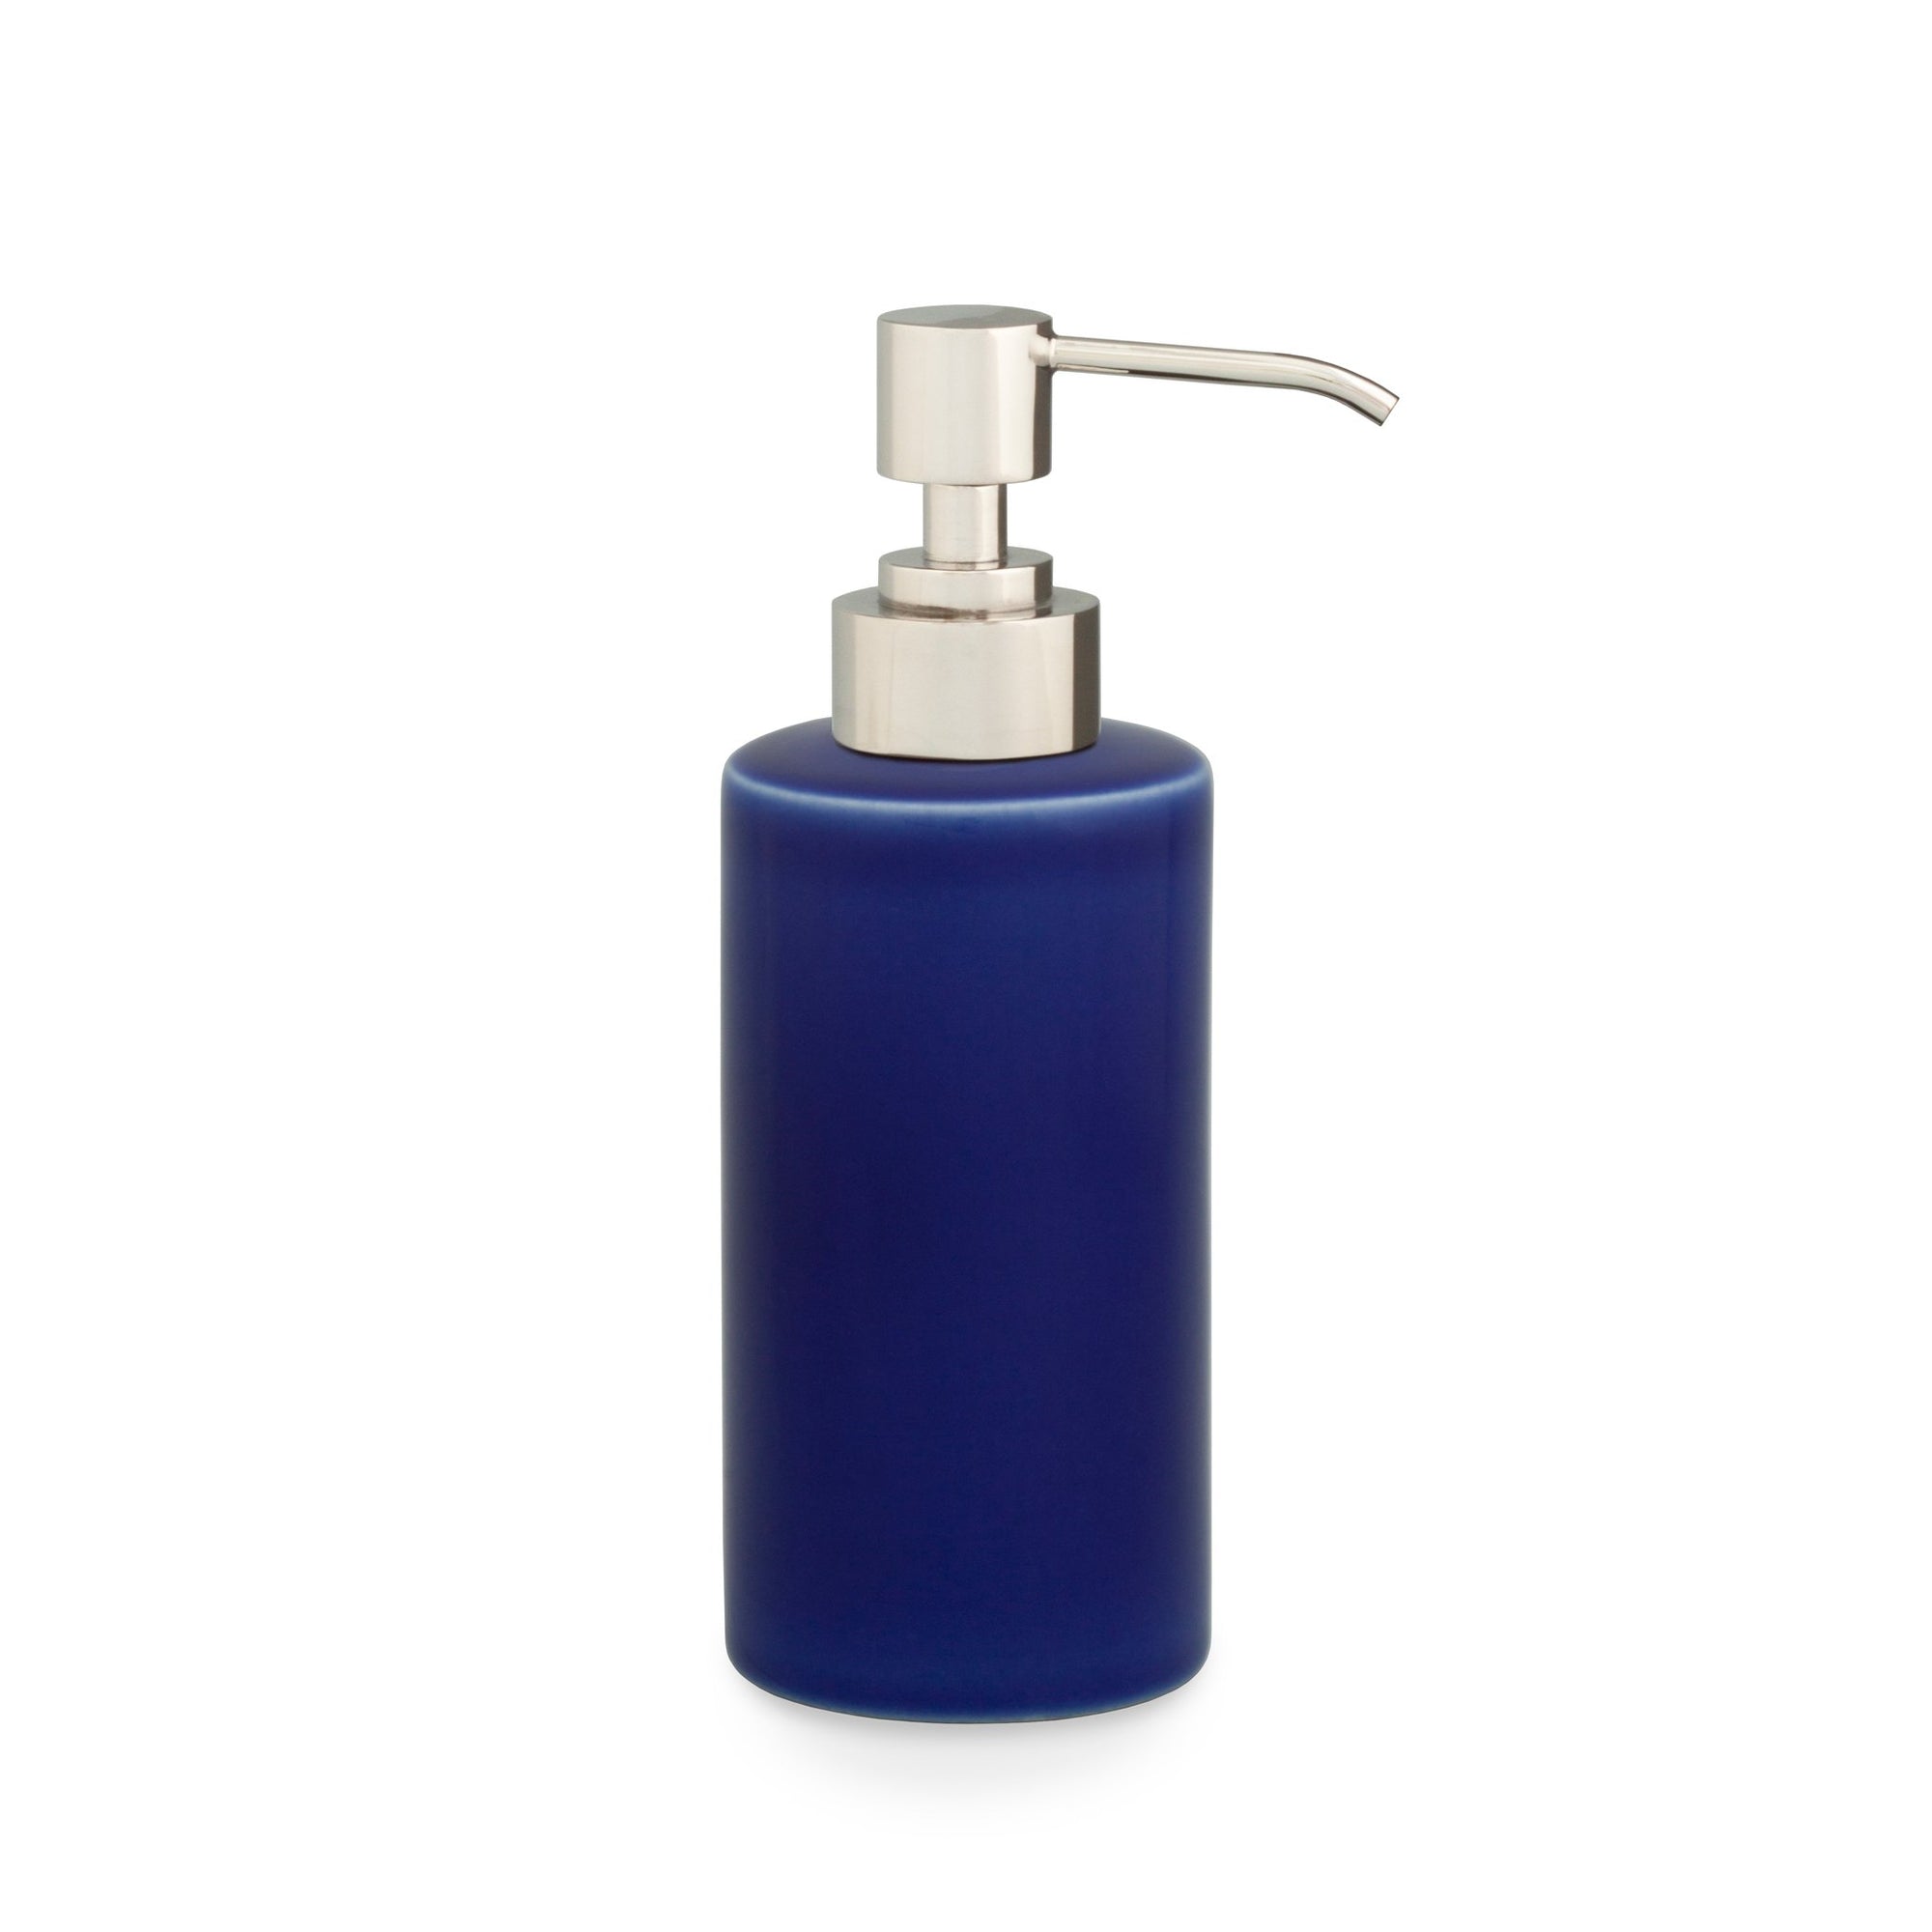 3380-PUMP-BL04-HP Sherle Wagner International Royal Blue Mode Ceramic Soap Pump with High Polished Platinum metal finish